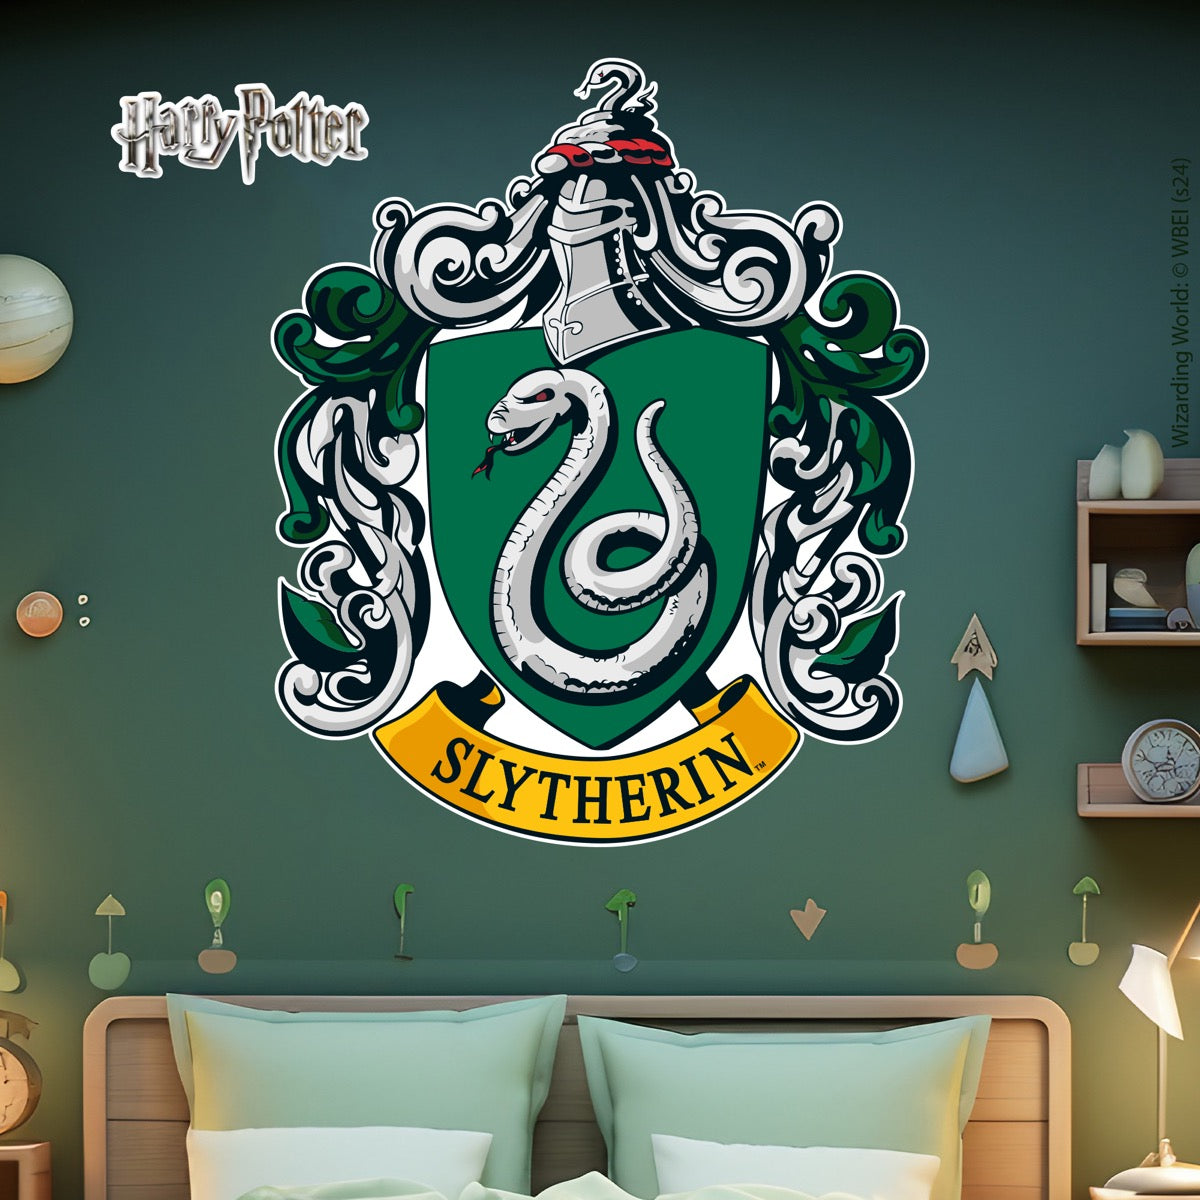 HARRY POTTER Wall Sticker - Slytherin Crest Wall Decal Wizarding World Art